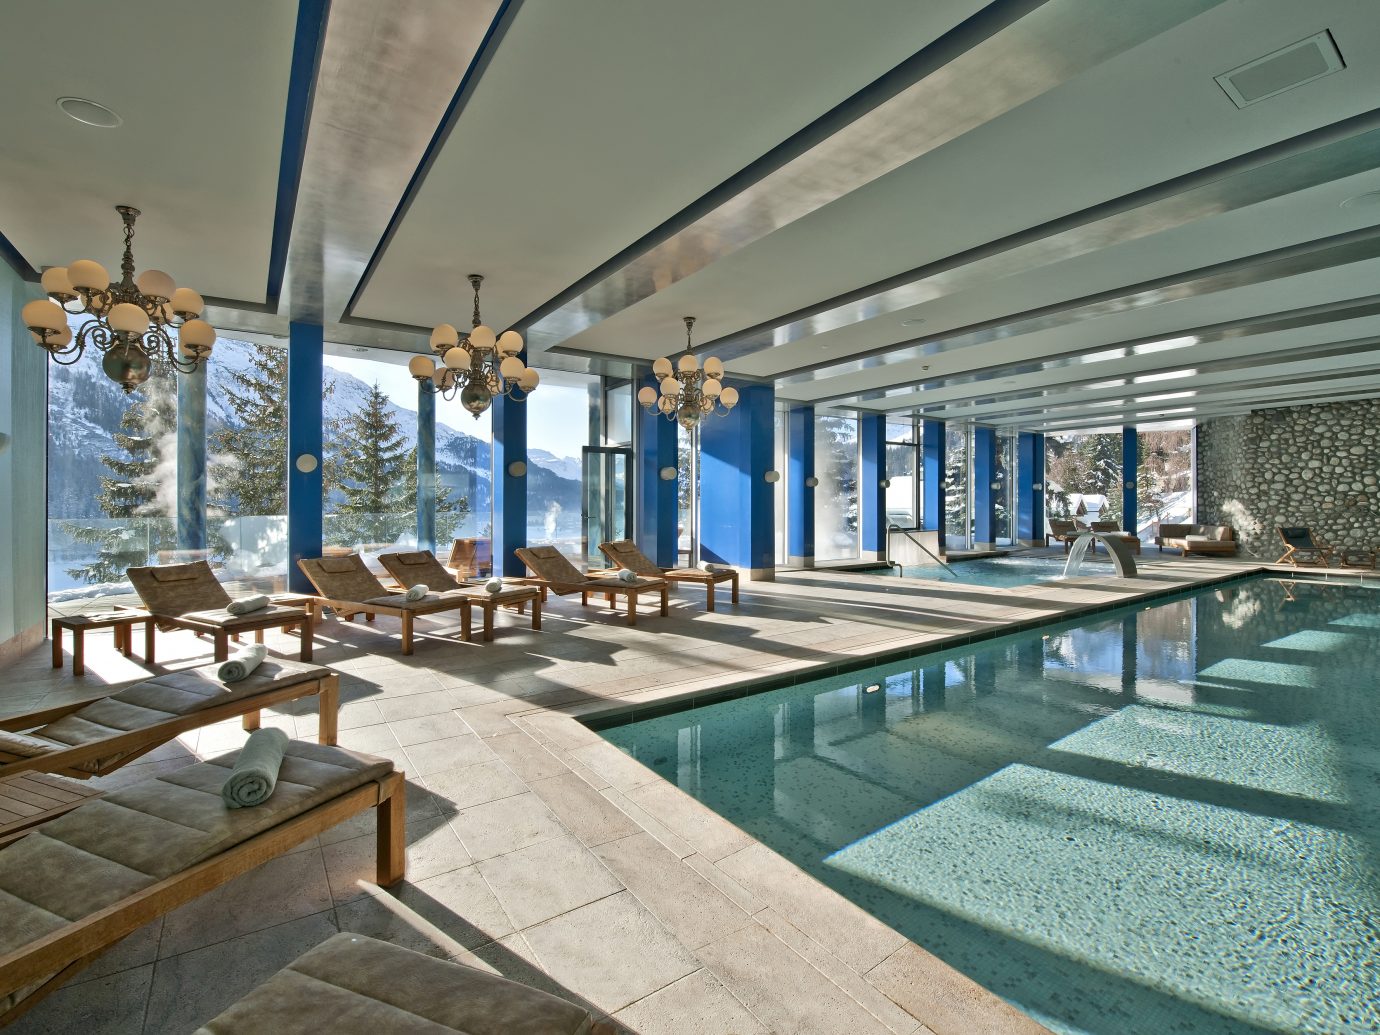 Pool at Carlton Hotel in St. Moritz